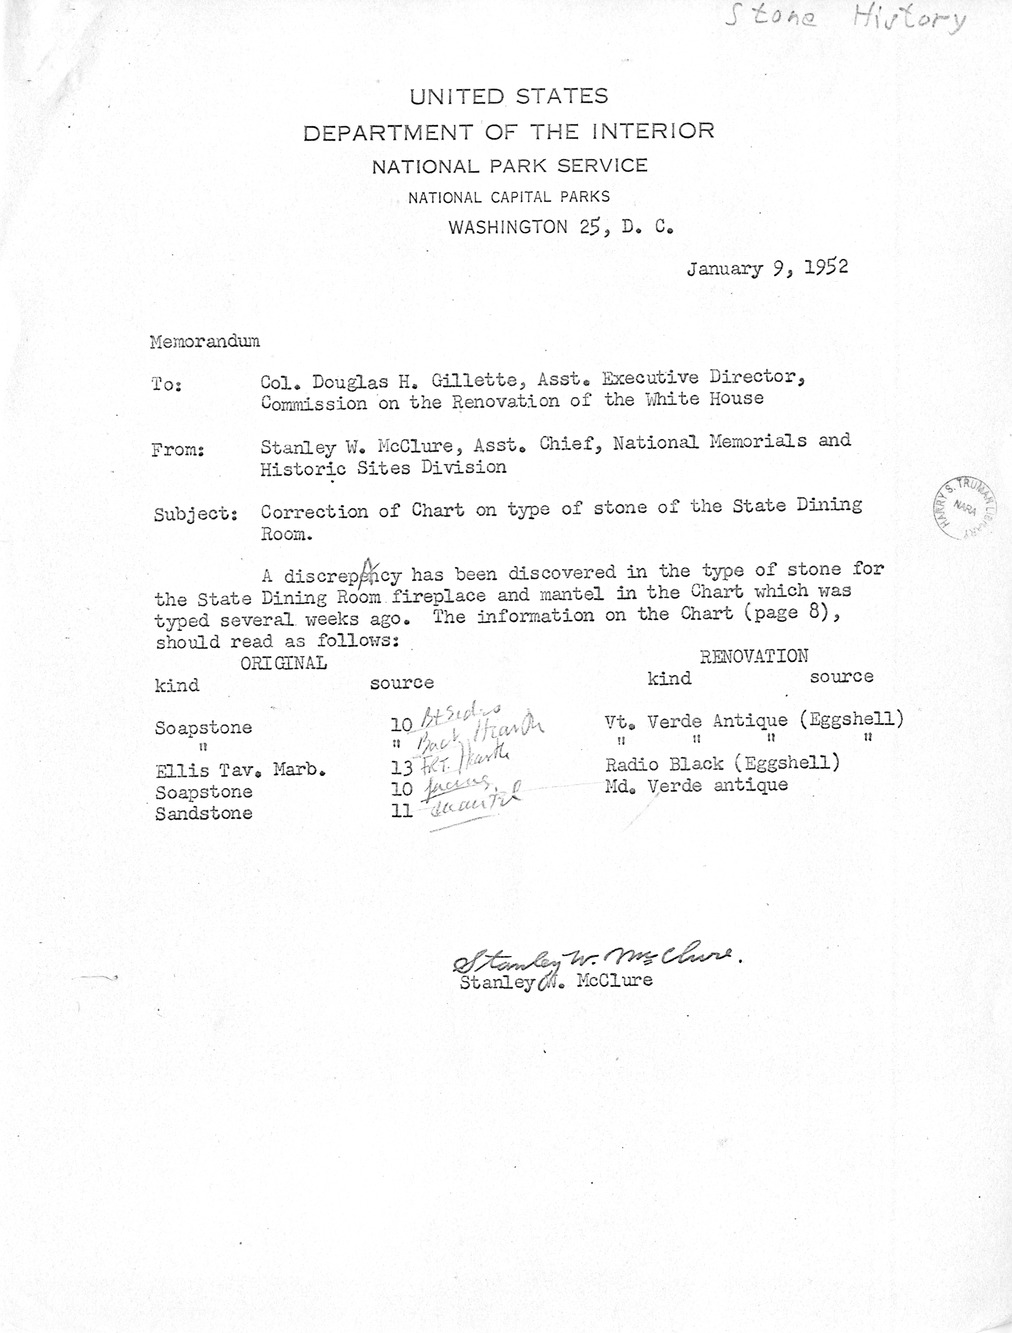 Memorandum from Stanley W. McClure to Colonel Douglas H. Gillette